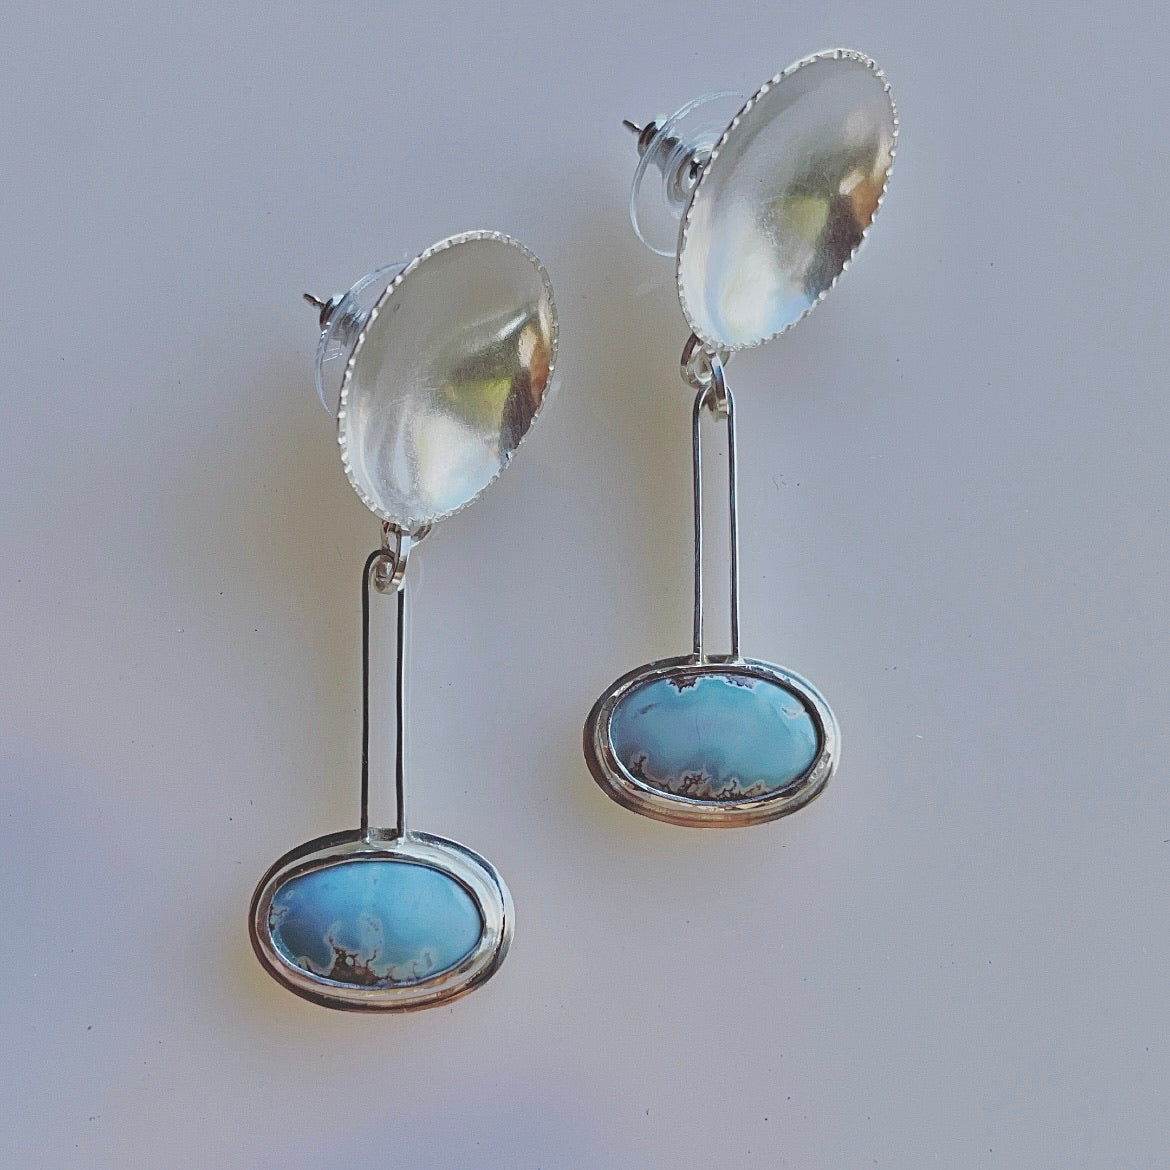 Balance earrings with Sandhill turquoise-serena kojimoto studio